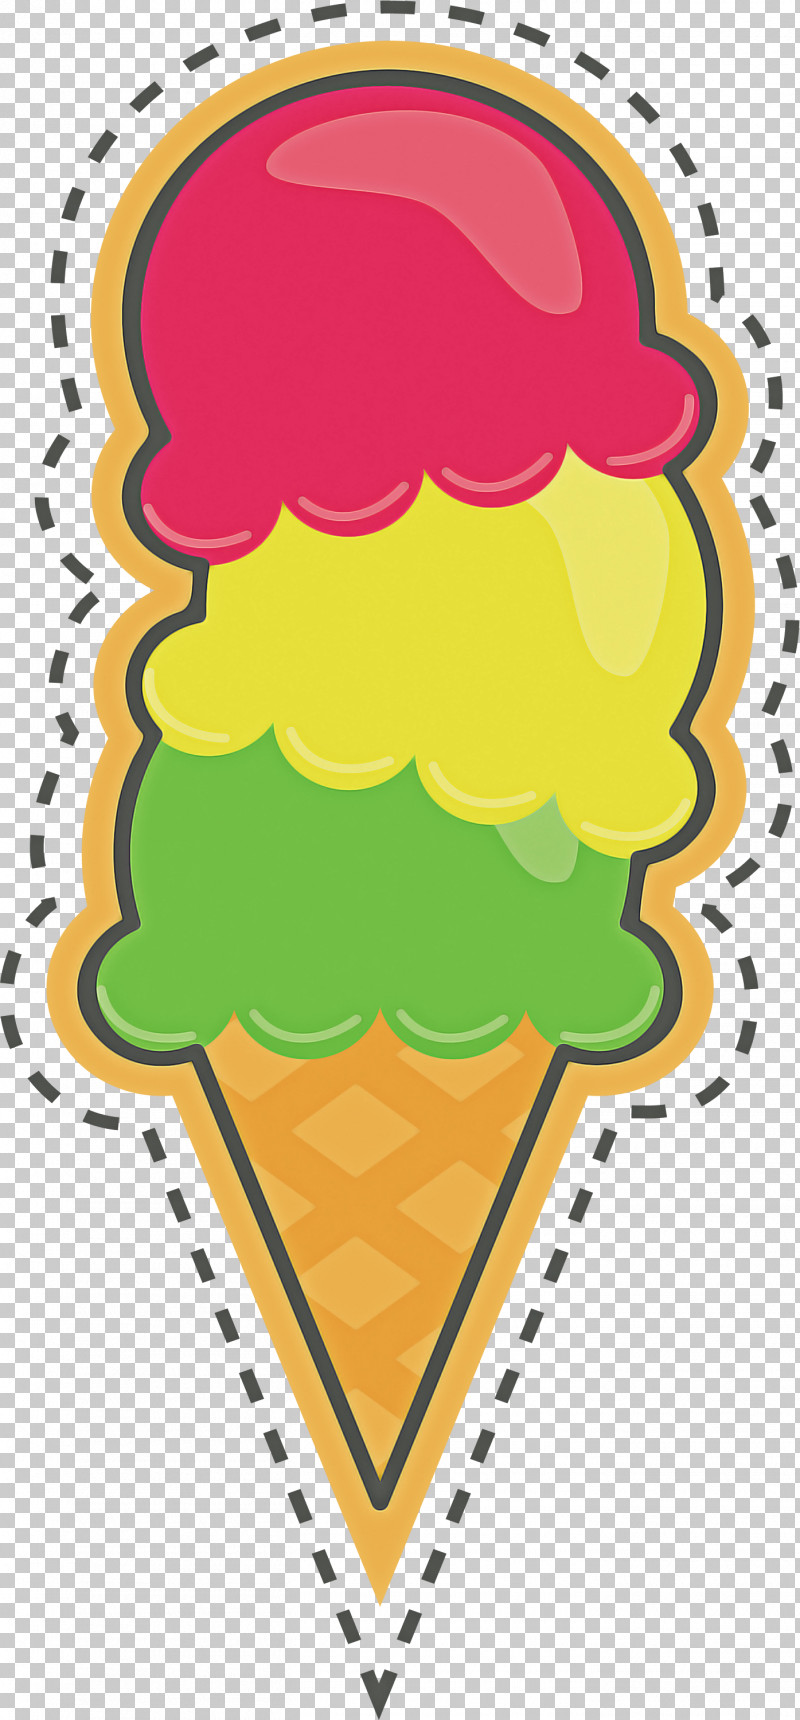 Ice Cream Cone Yellow Frozen Dessert PNG, Clipart, Frozen Dessert, Ice Cream Cone, Yellow Free PNG Download